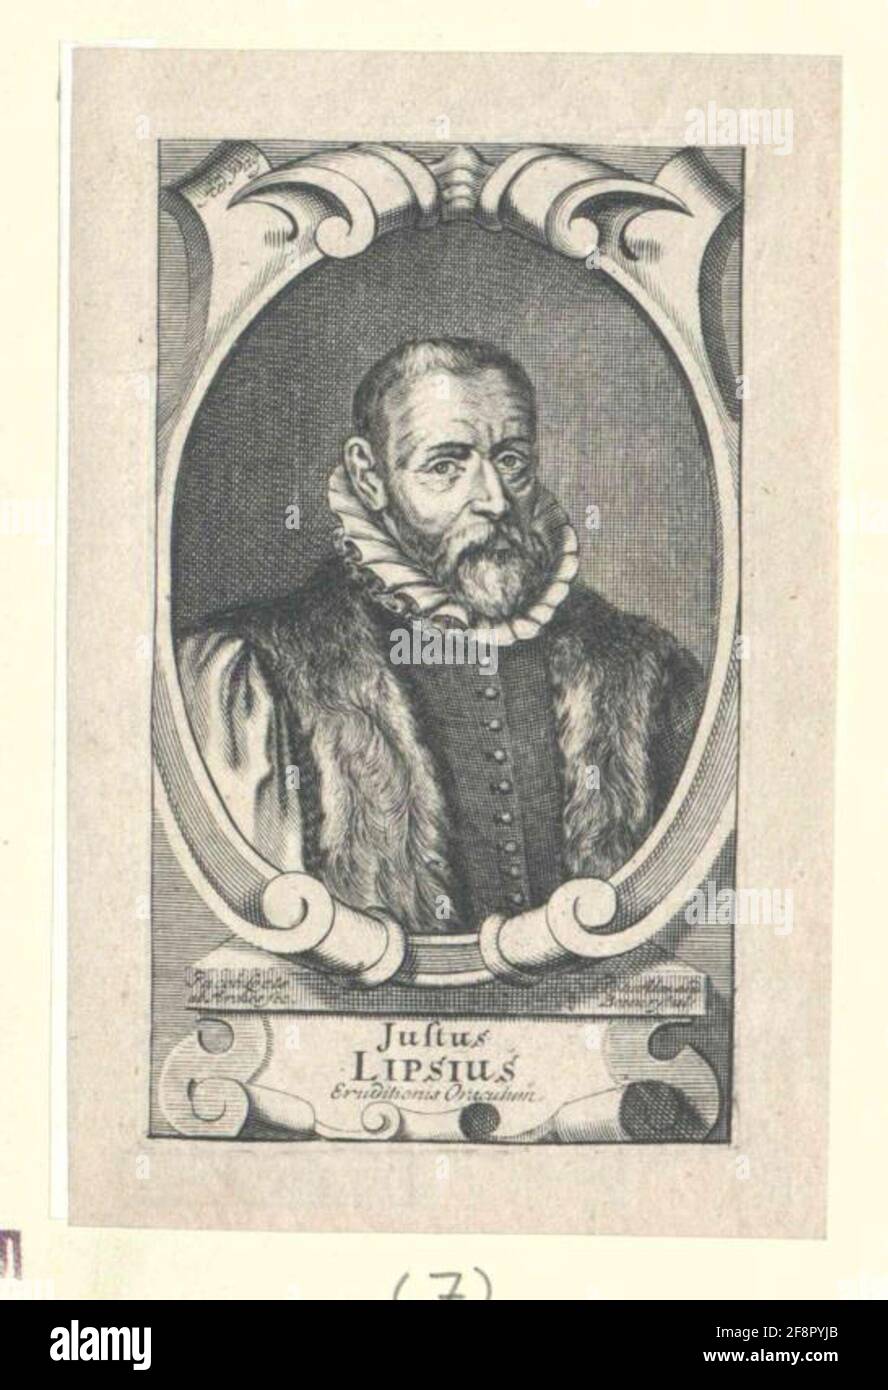 Lipsius, Justus Stecher: Boener, Johann AlexanderDation: 1662/1720 Stock Photo